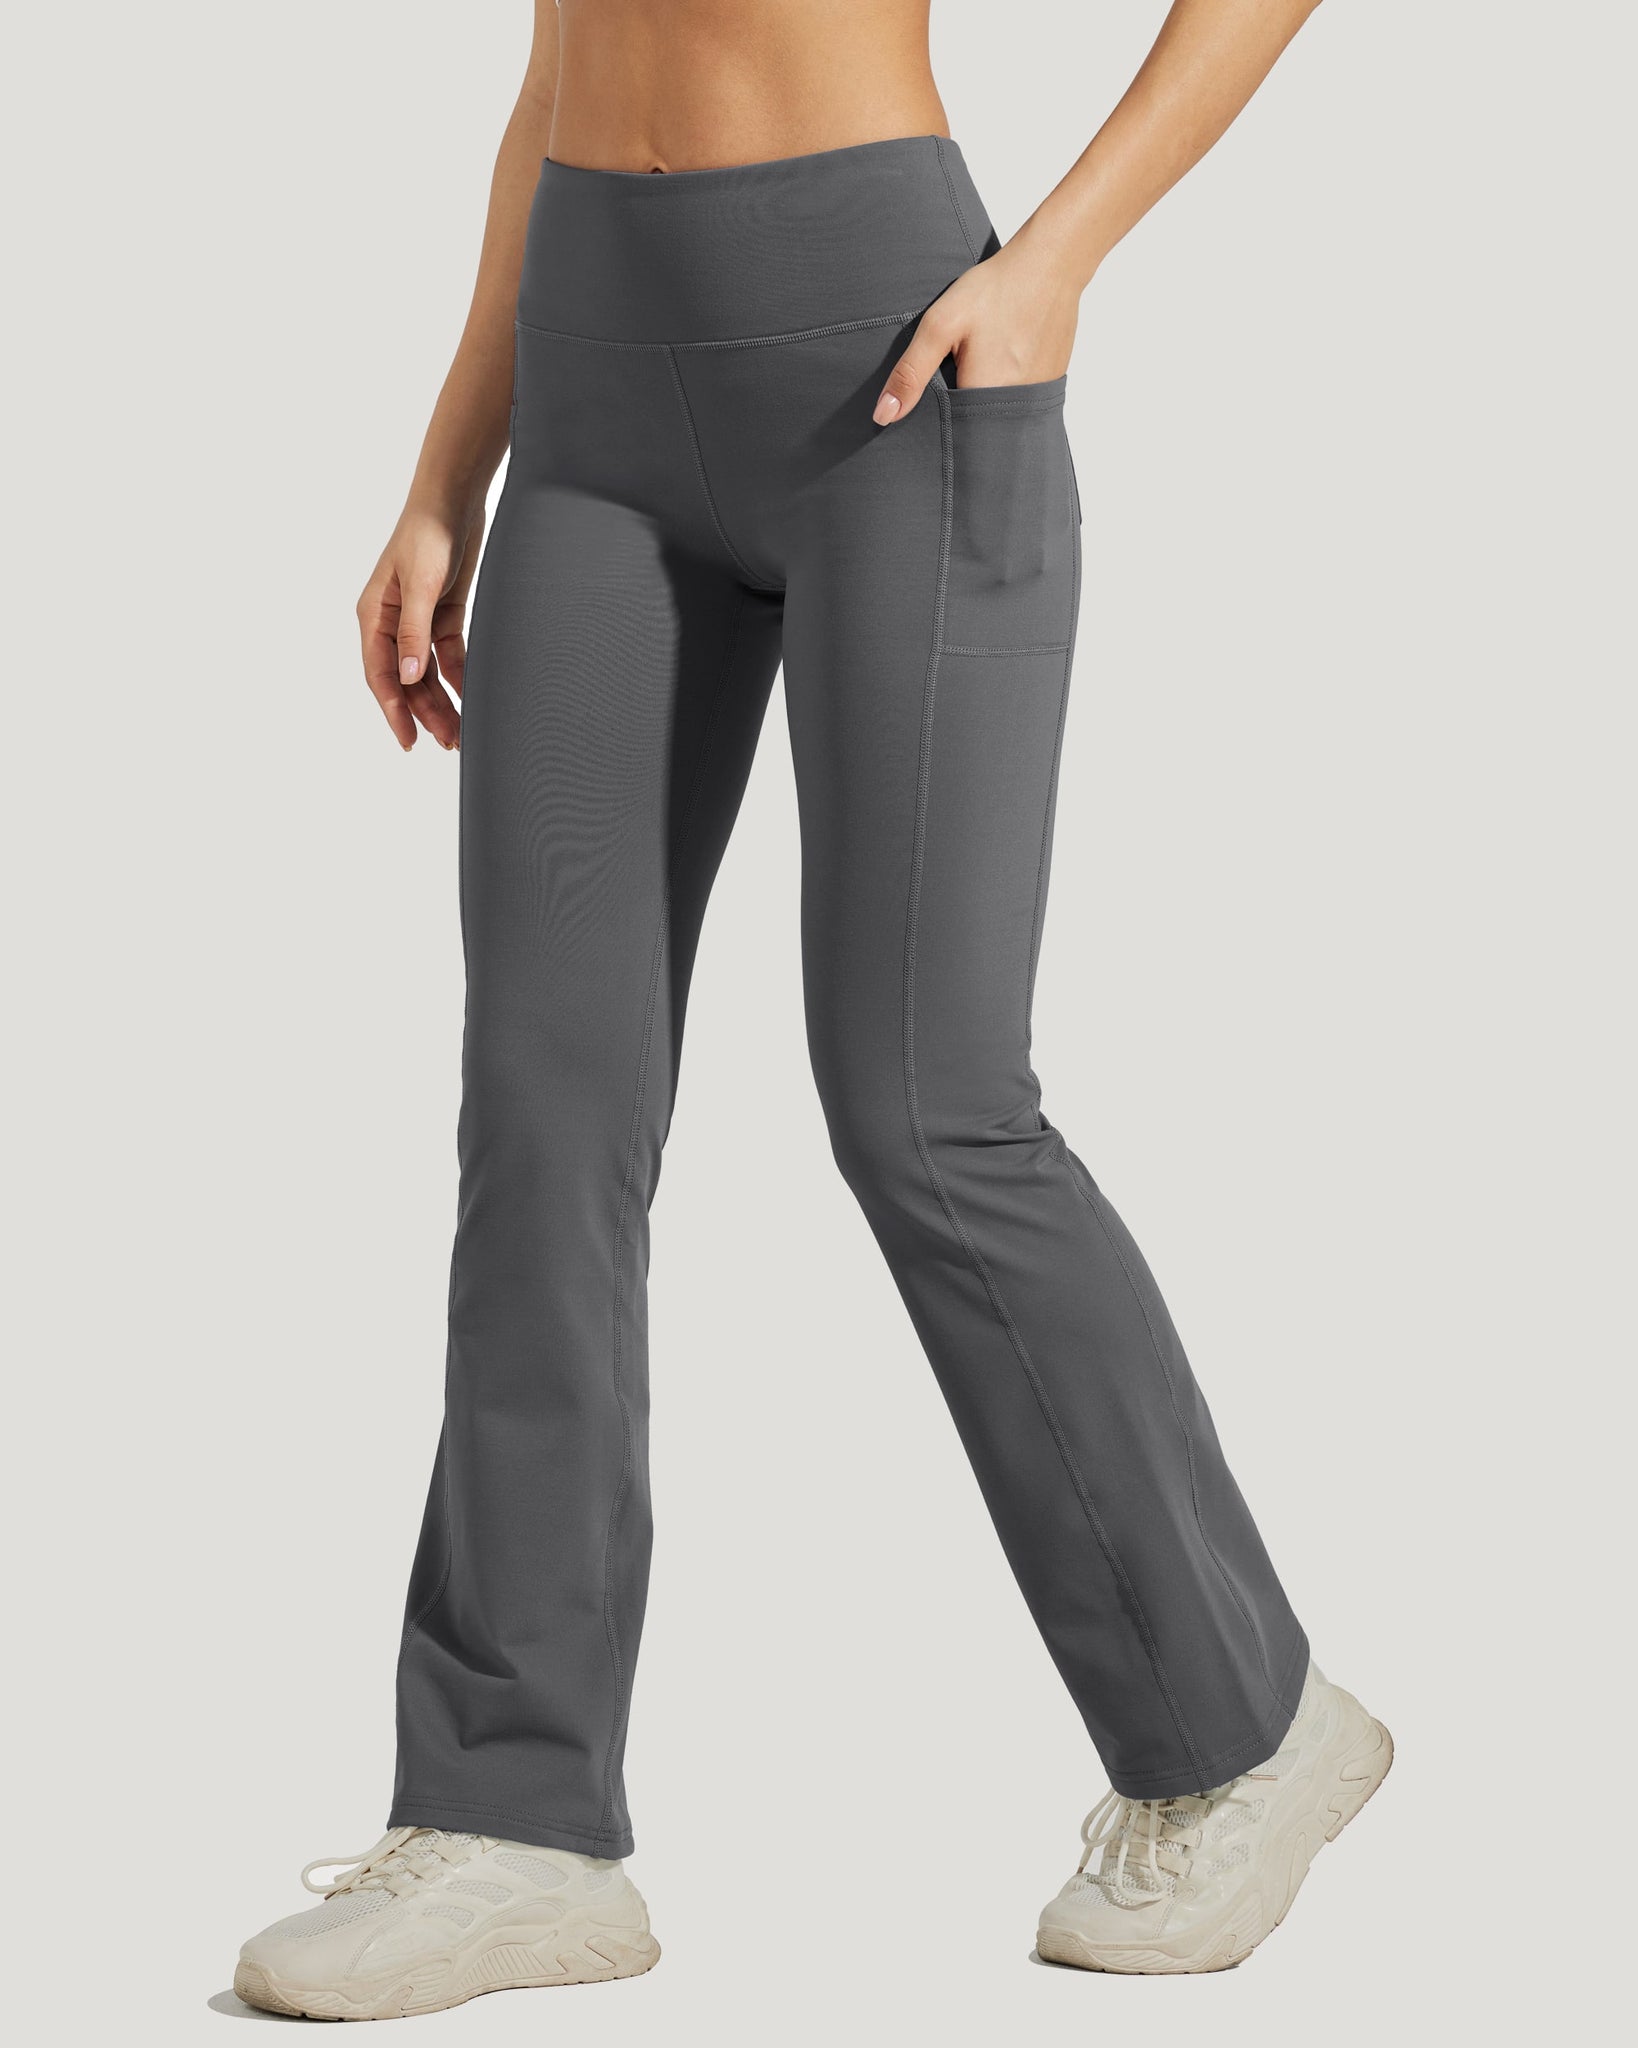 Women's Fleece Lined Bootcut Yoga Pants_Gray_model4